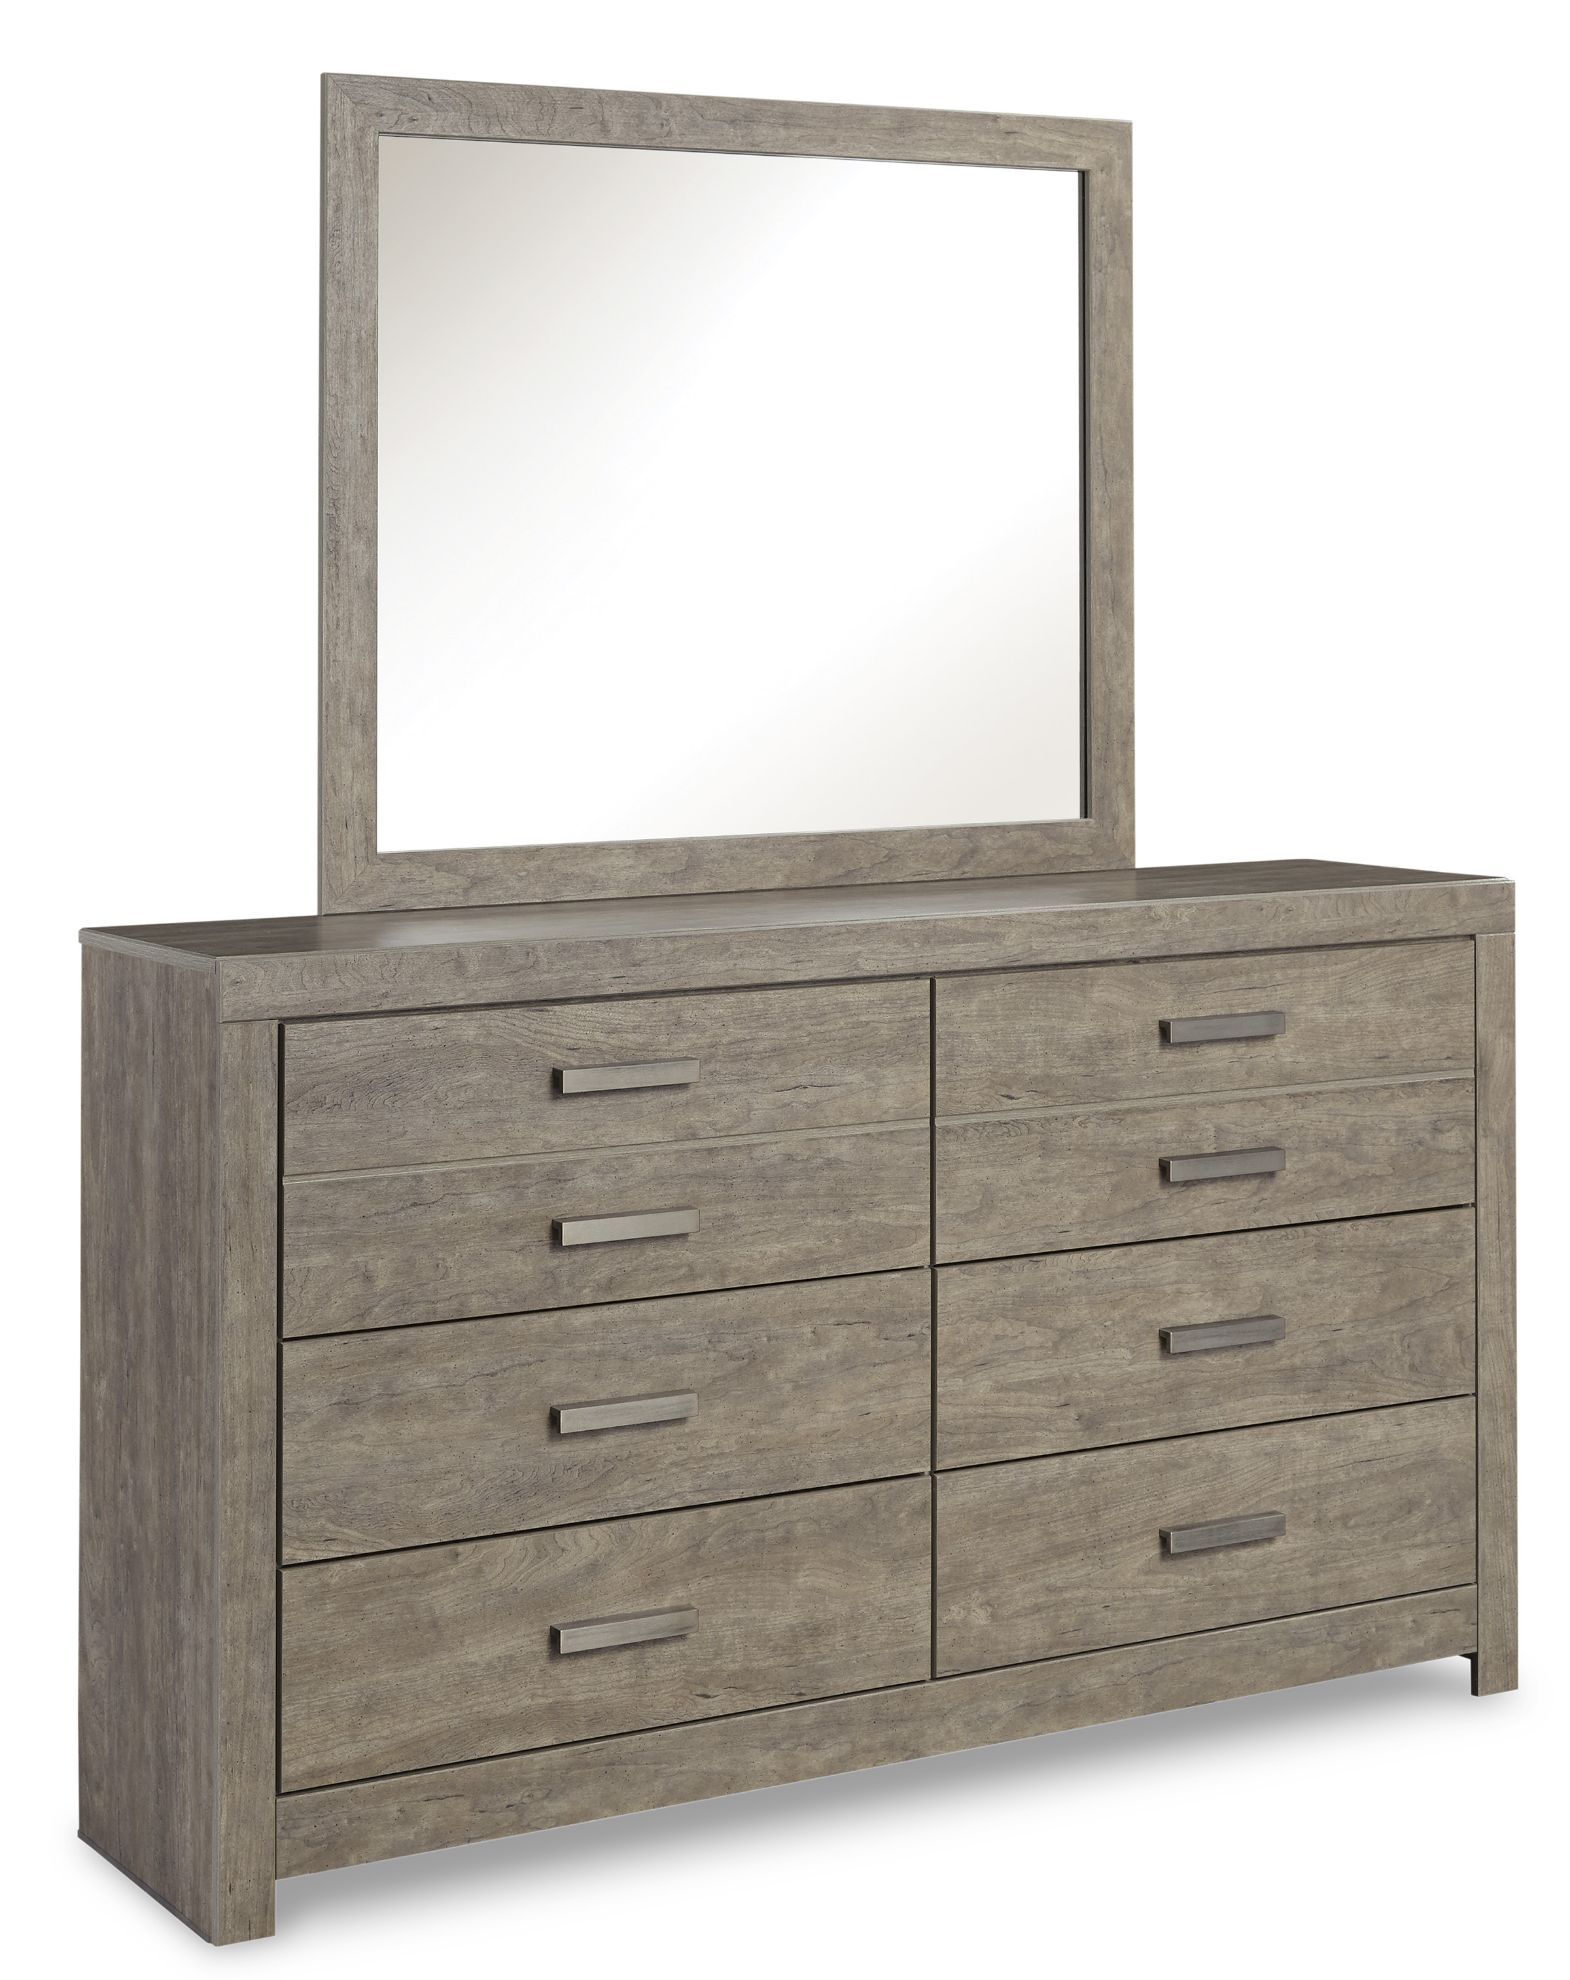 Culverbach Dresser and Mirror